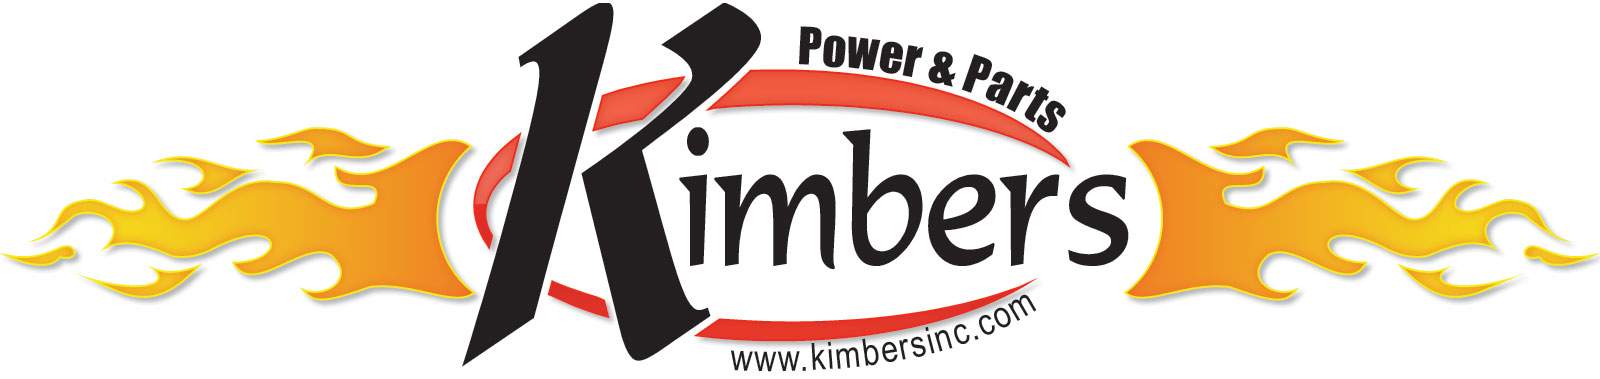 Kimber's, Inc. Since 1927